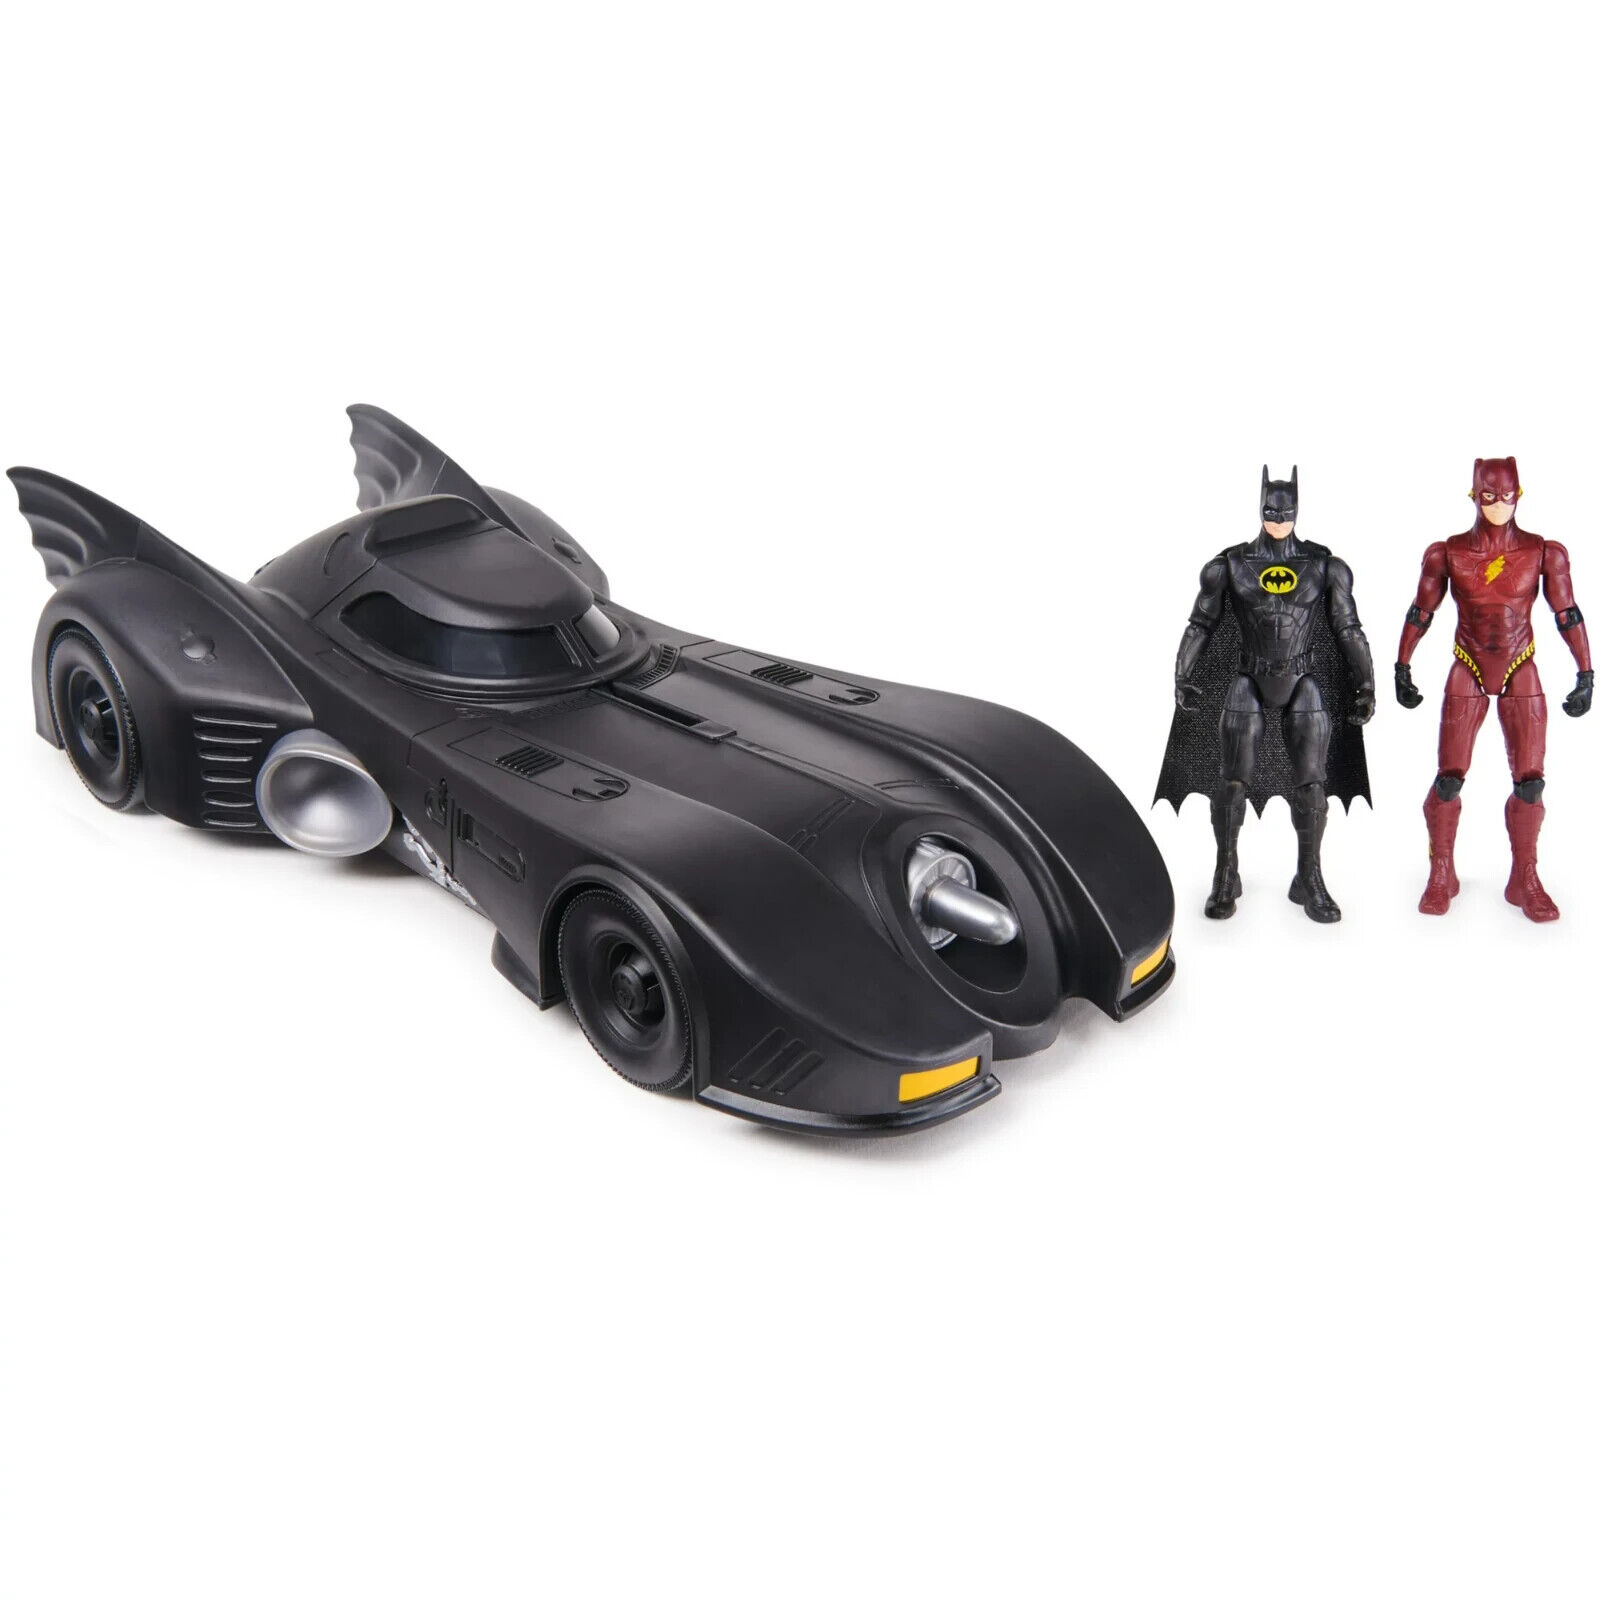 DC Comics: The Flash Batmobile 3-Pack with 2 Figures and Batmobile NIB Batman